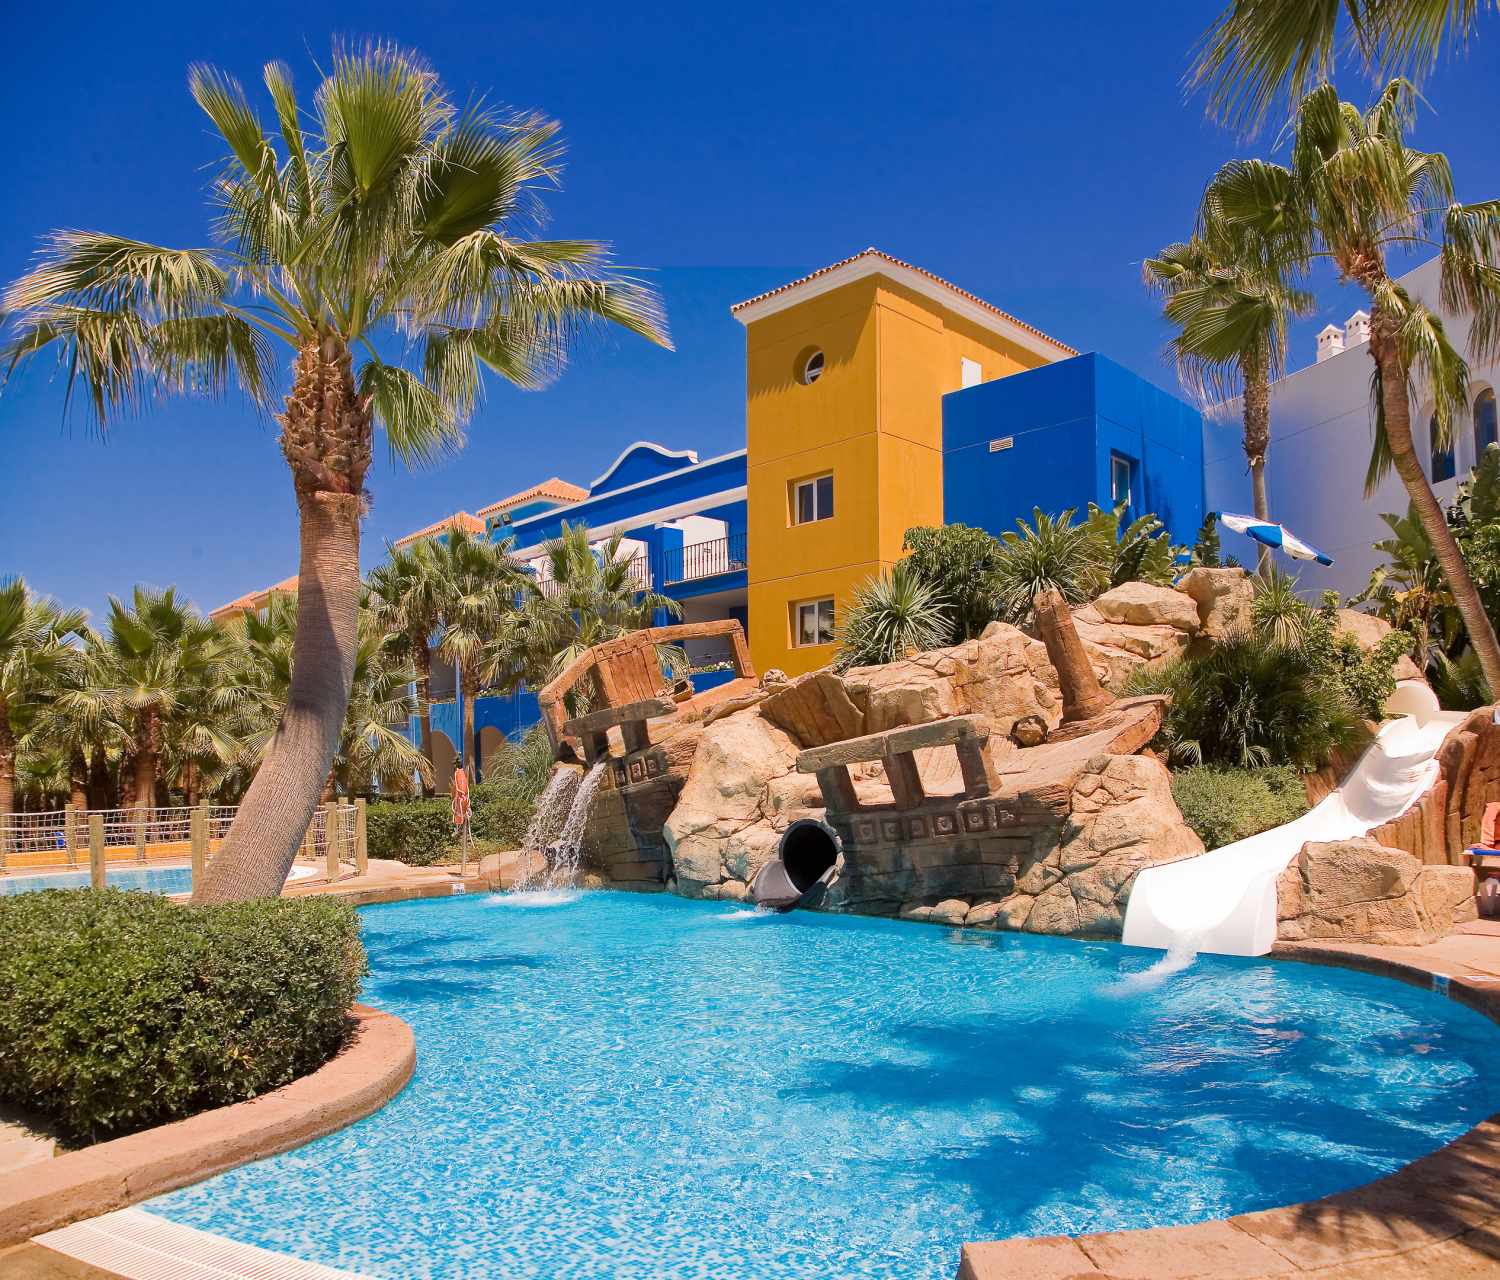 Playaballena Aquapark & Spa Hotel, Rota, Costa de la Luz, Spanje